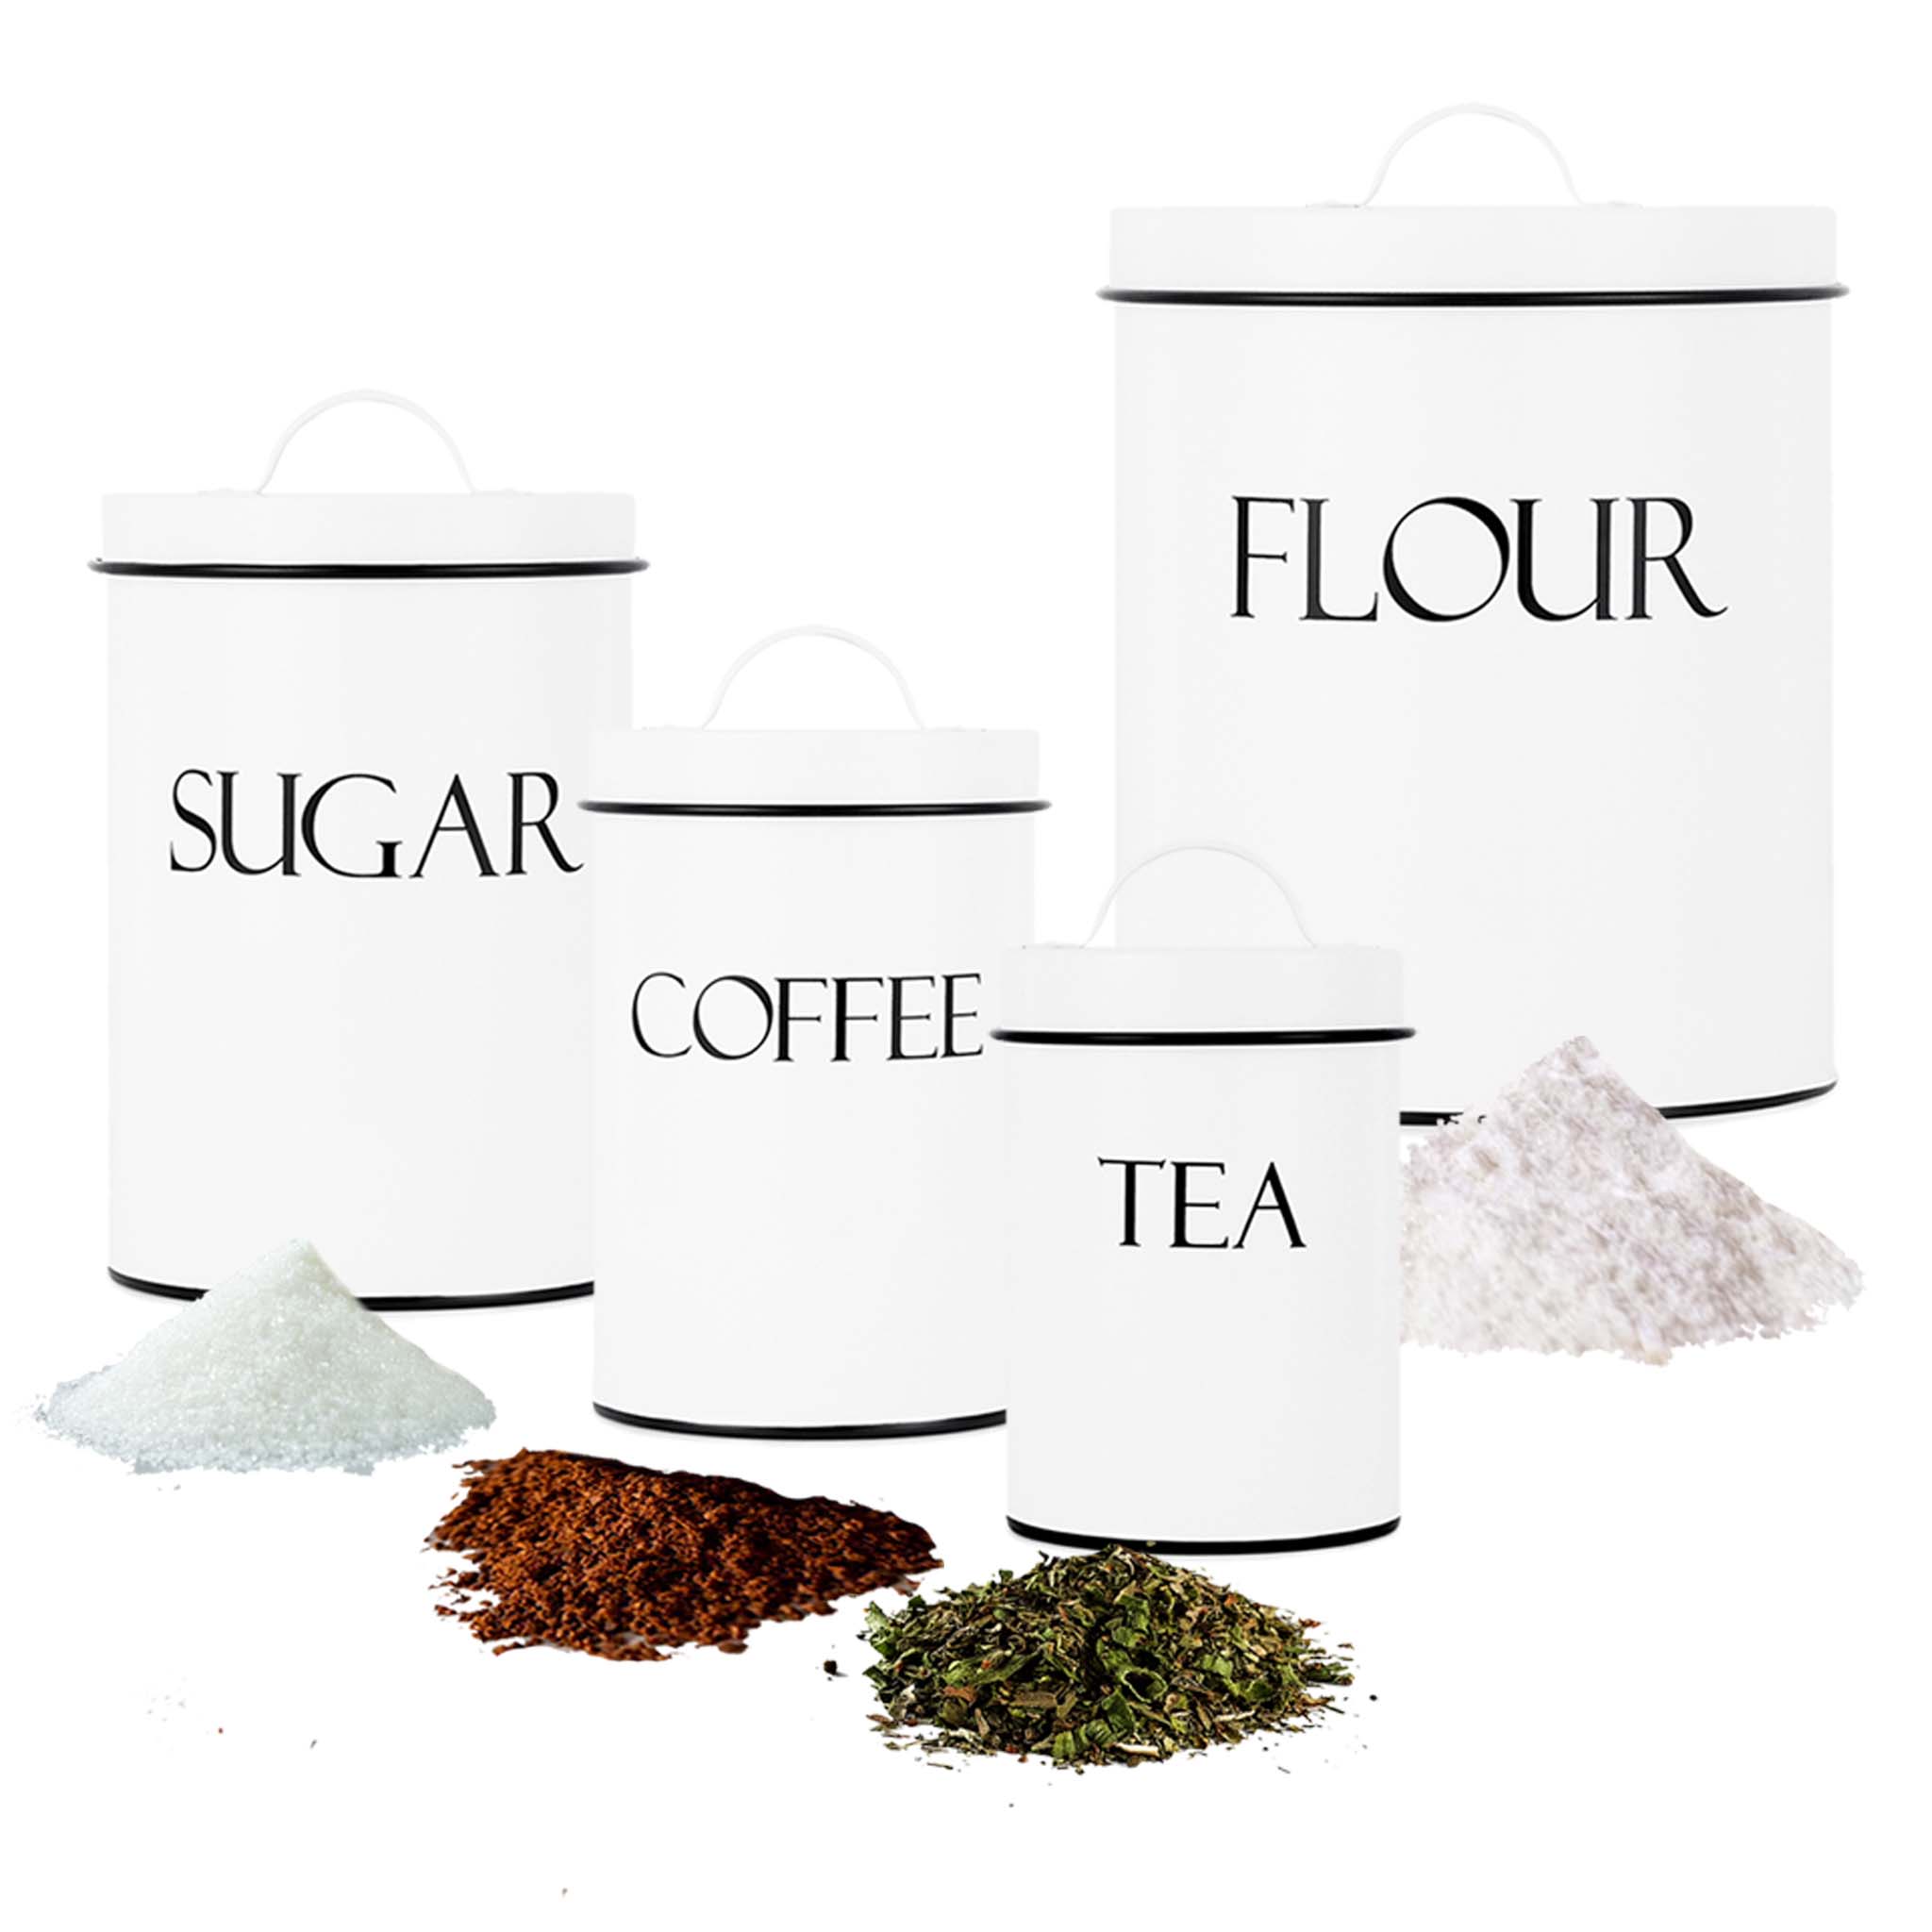 Flour Sugar Coffee Canister Set